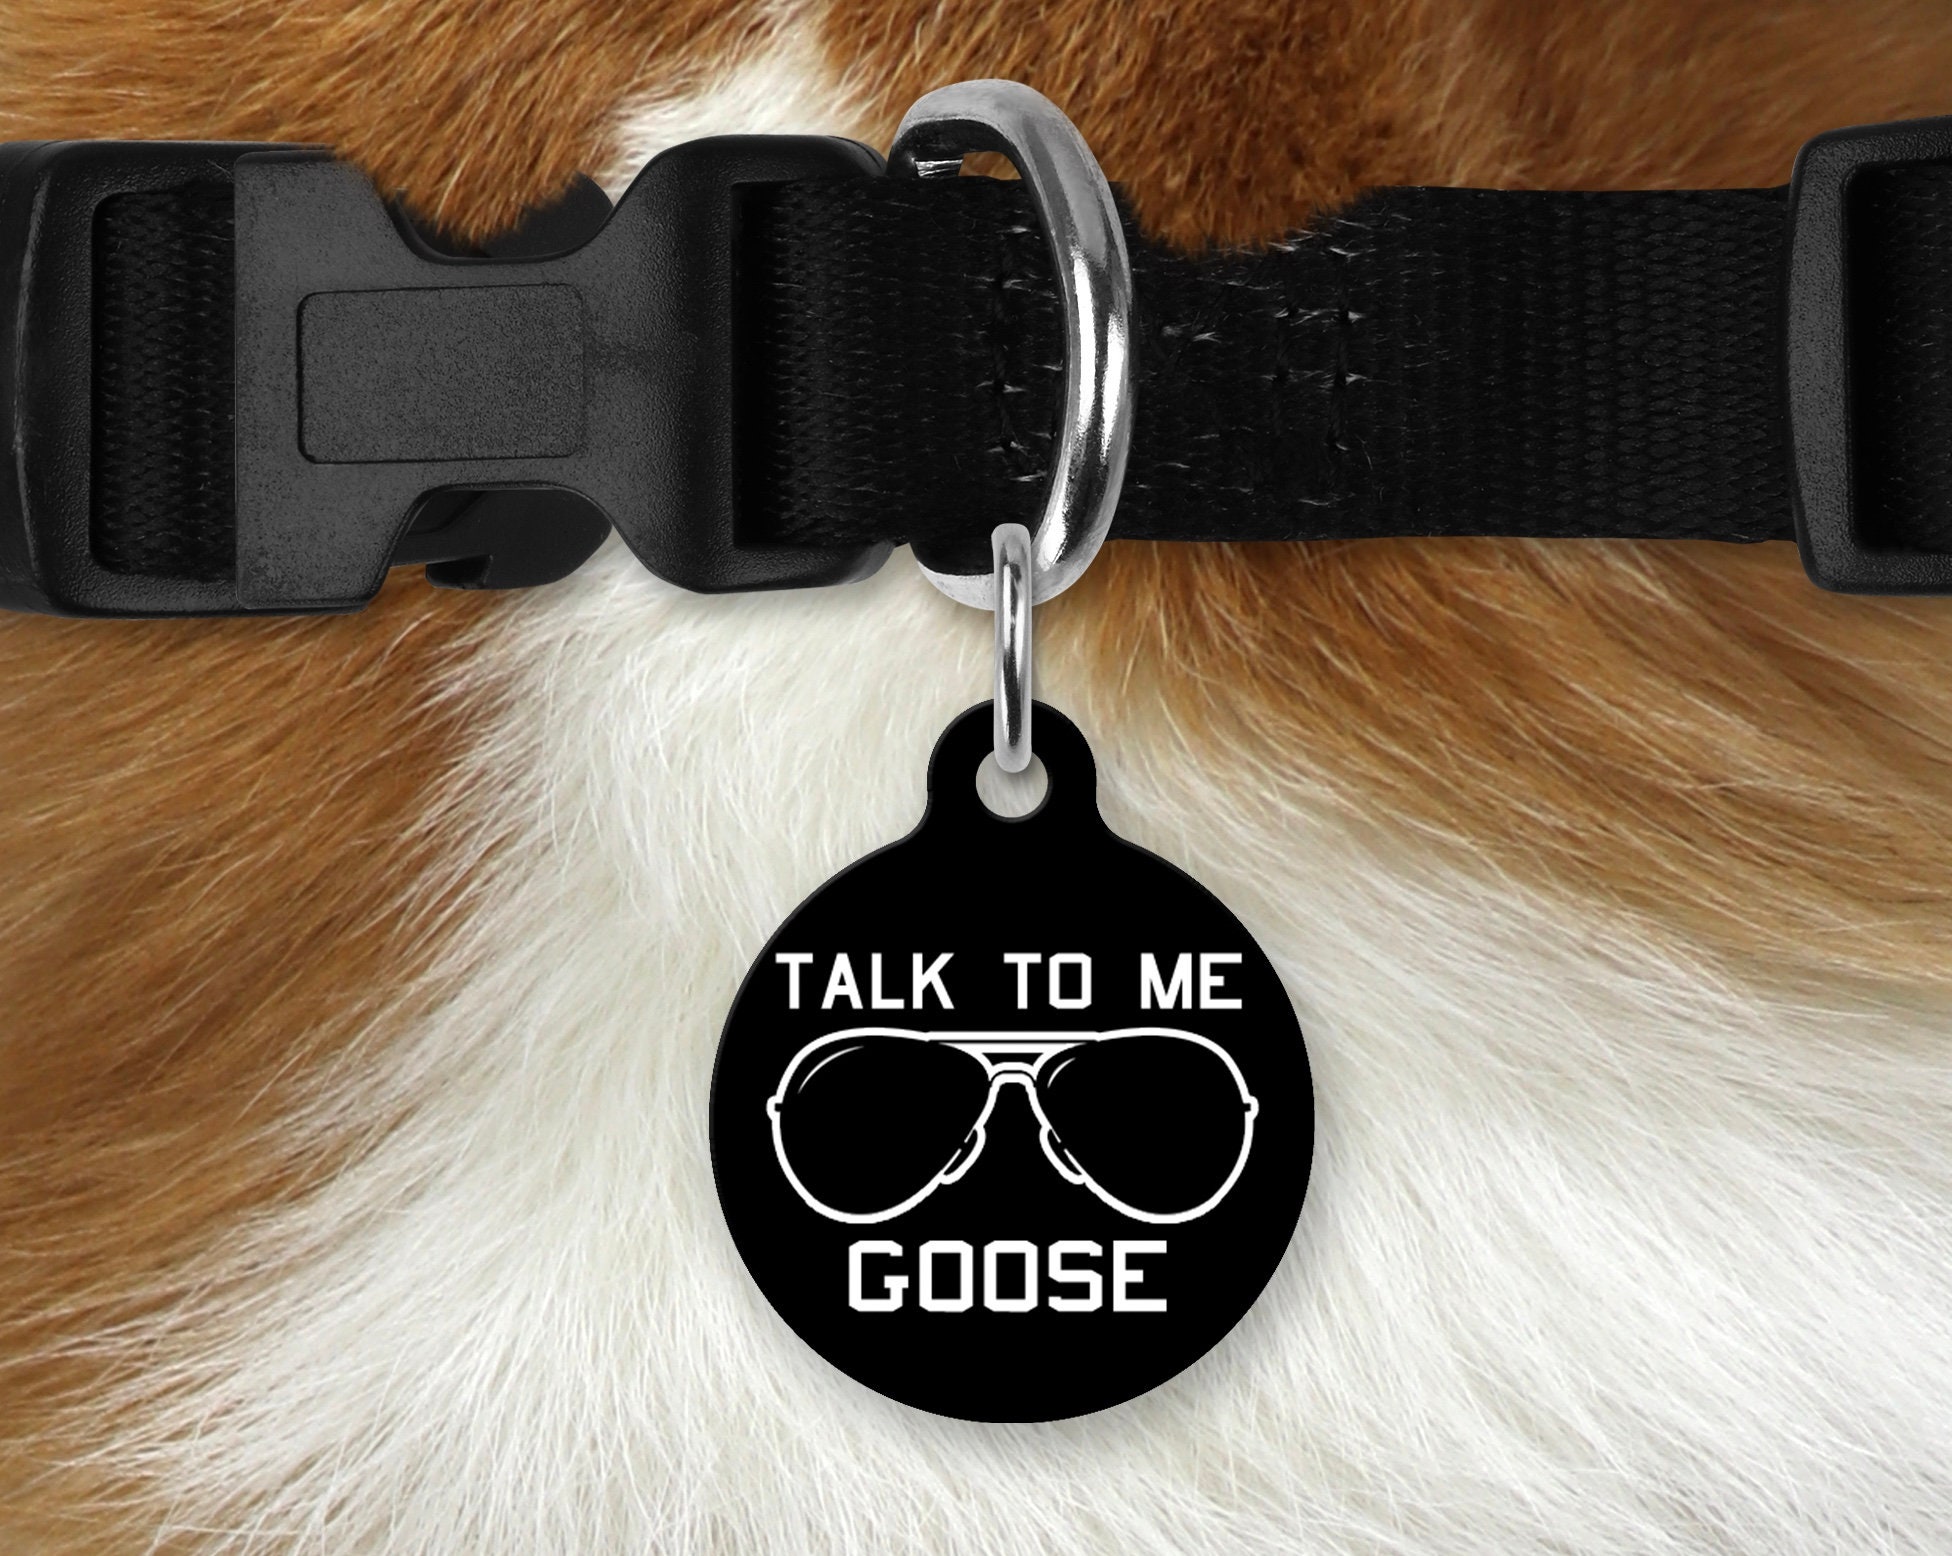 Dog Bale Sex Videos - Talk to Me Goose Pet Tag top Gun-themed - Etsy